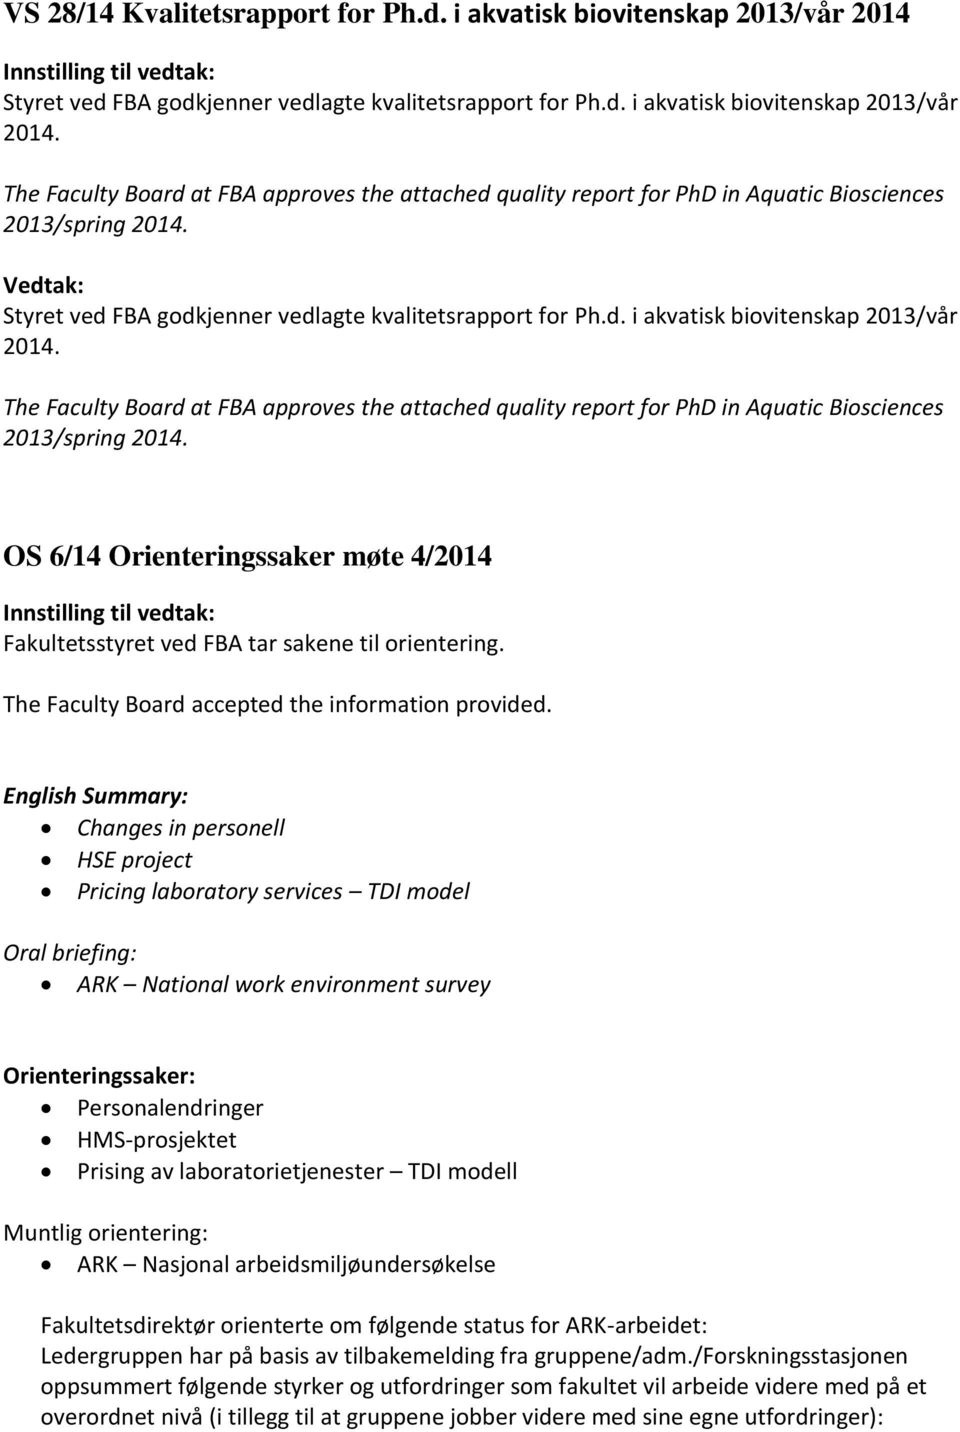 The Faculty Board at FBA approves the attached quality report for PhD in Aquatic Biosciences 2013/spring 2014. OS 6/14 Orienteringssaker møte 4/2014 Fakultetsstyret ved FBA tar sakene til orientering.